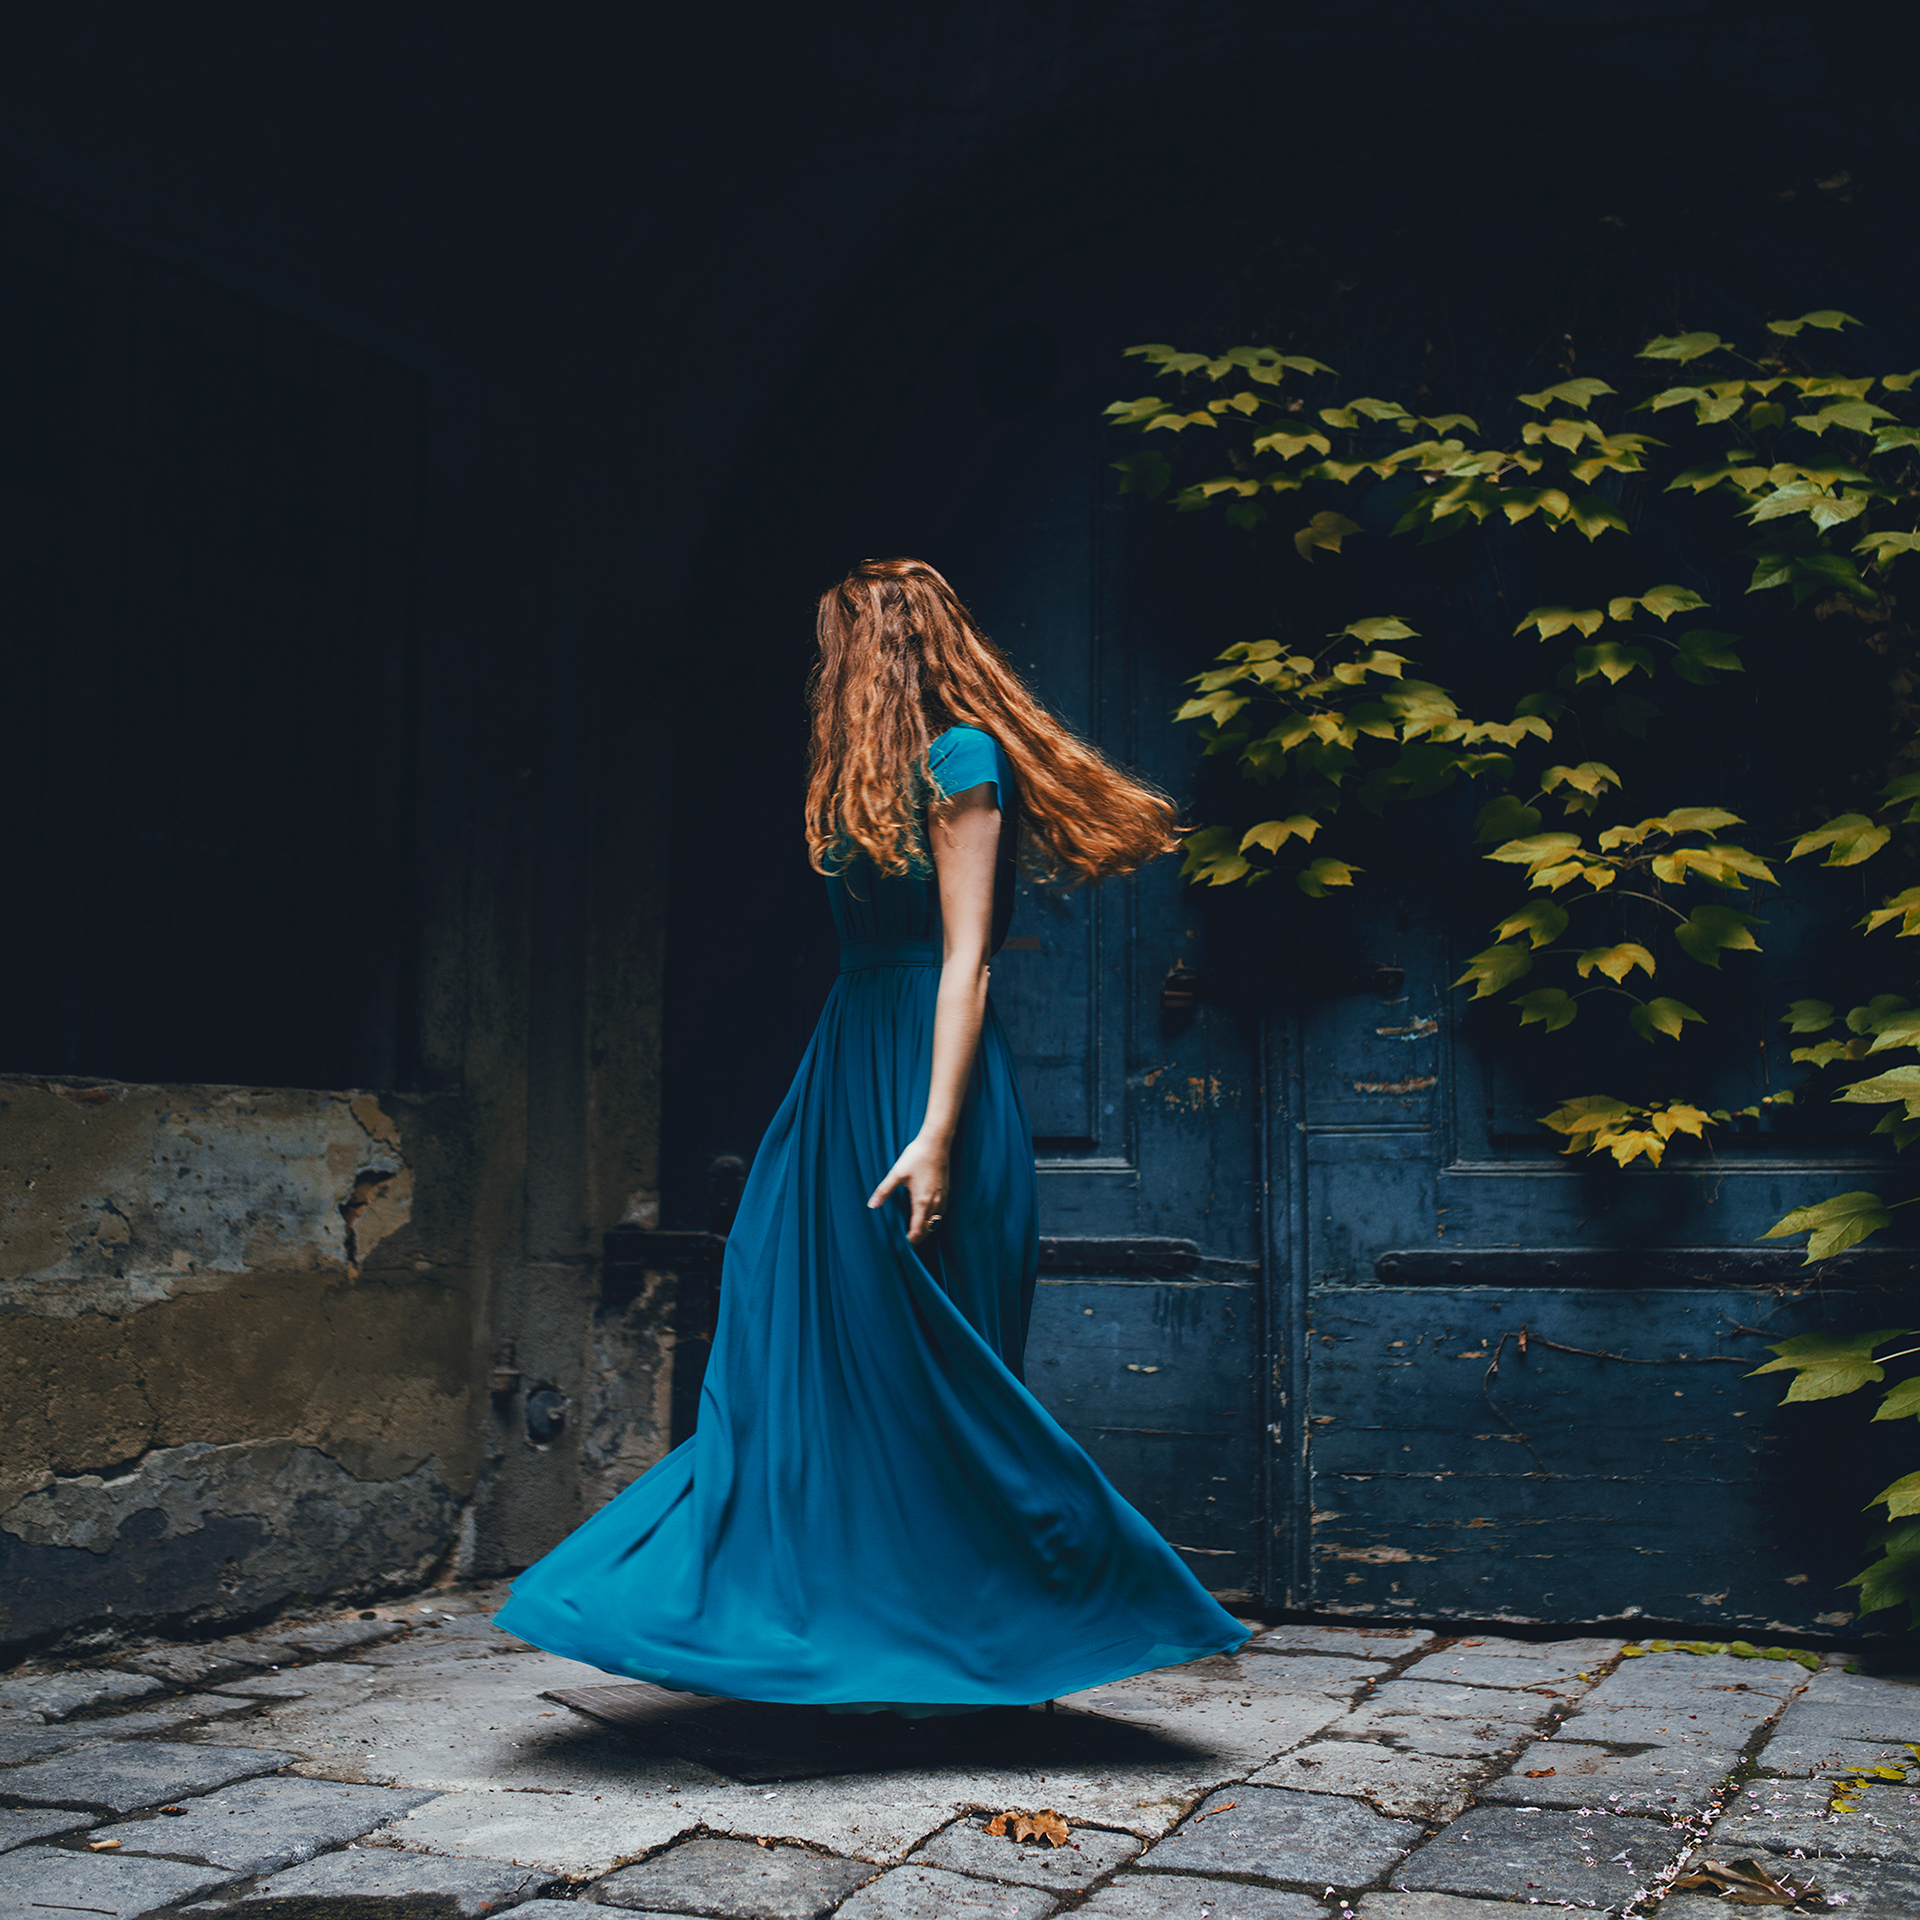 Jovana Rikalo в платье. Ines Hadzic. Inspiration фото арт. Girl Blue Dress Dancing. A long dream